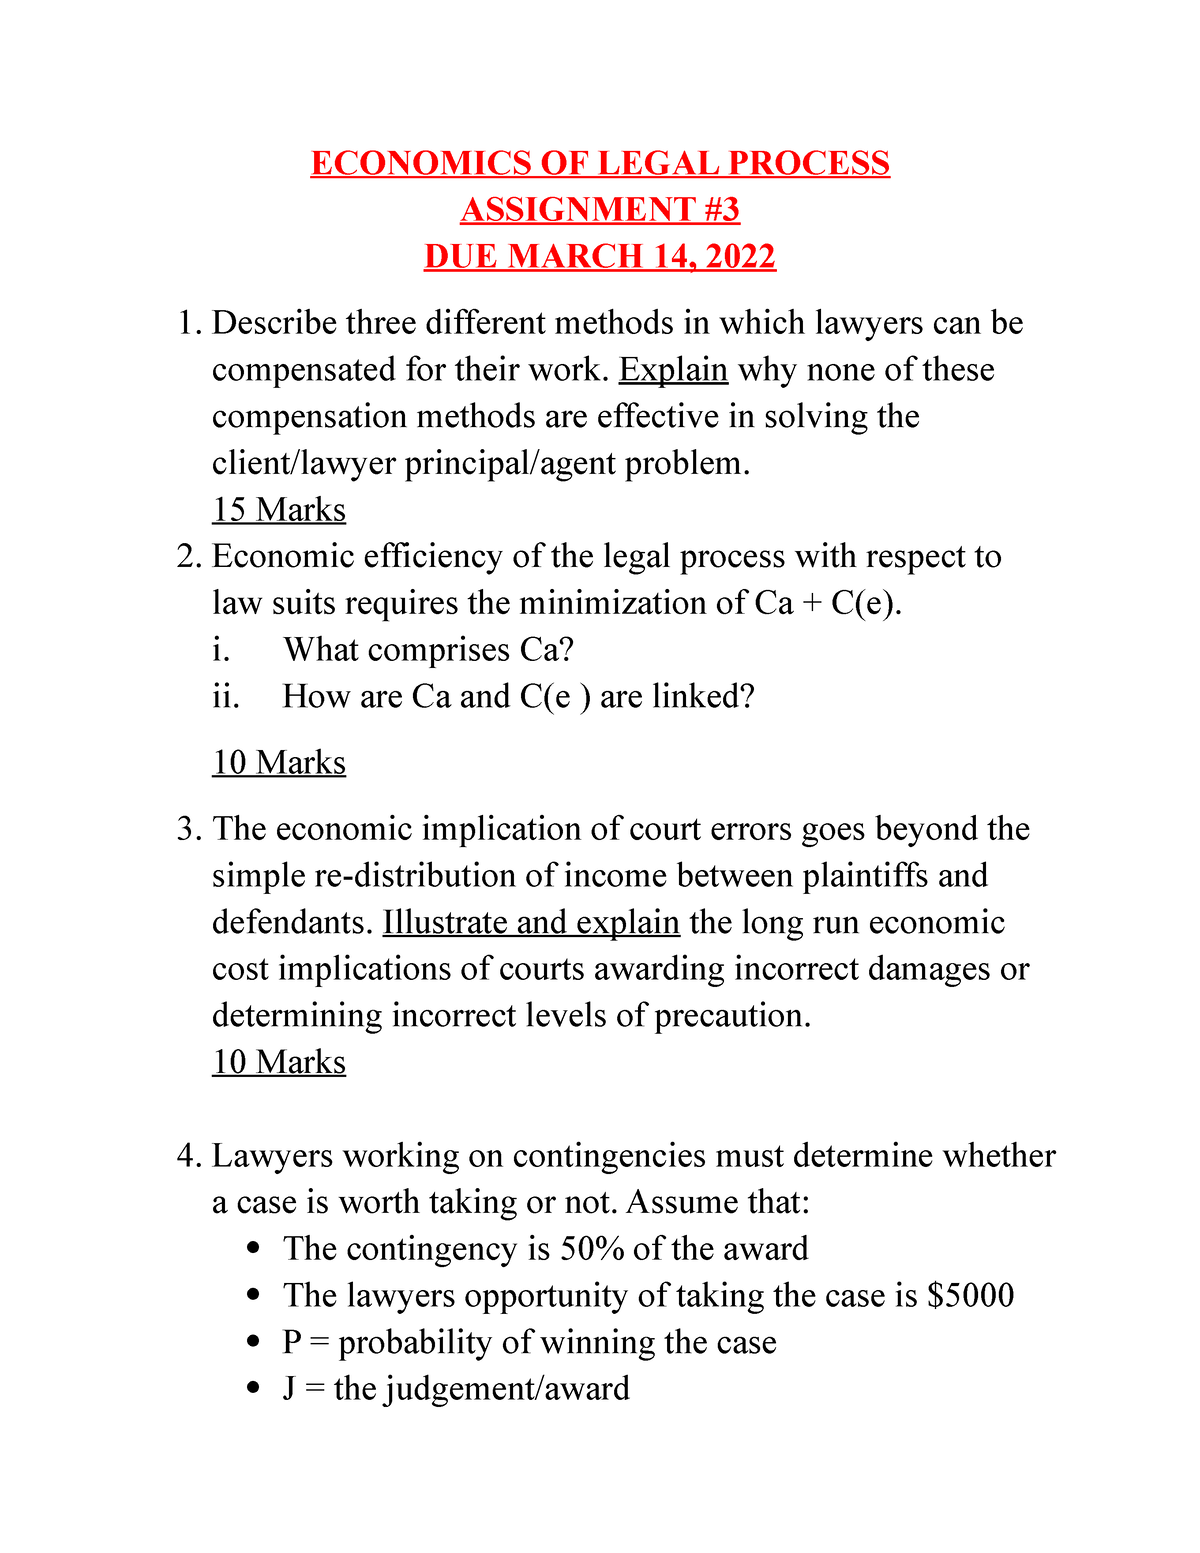 assignment 3 economics